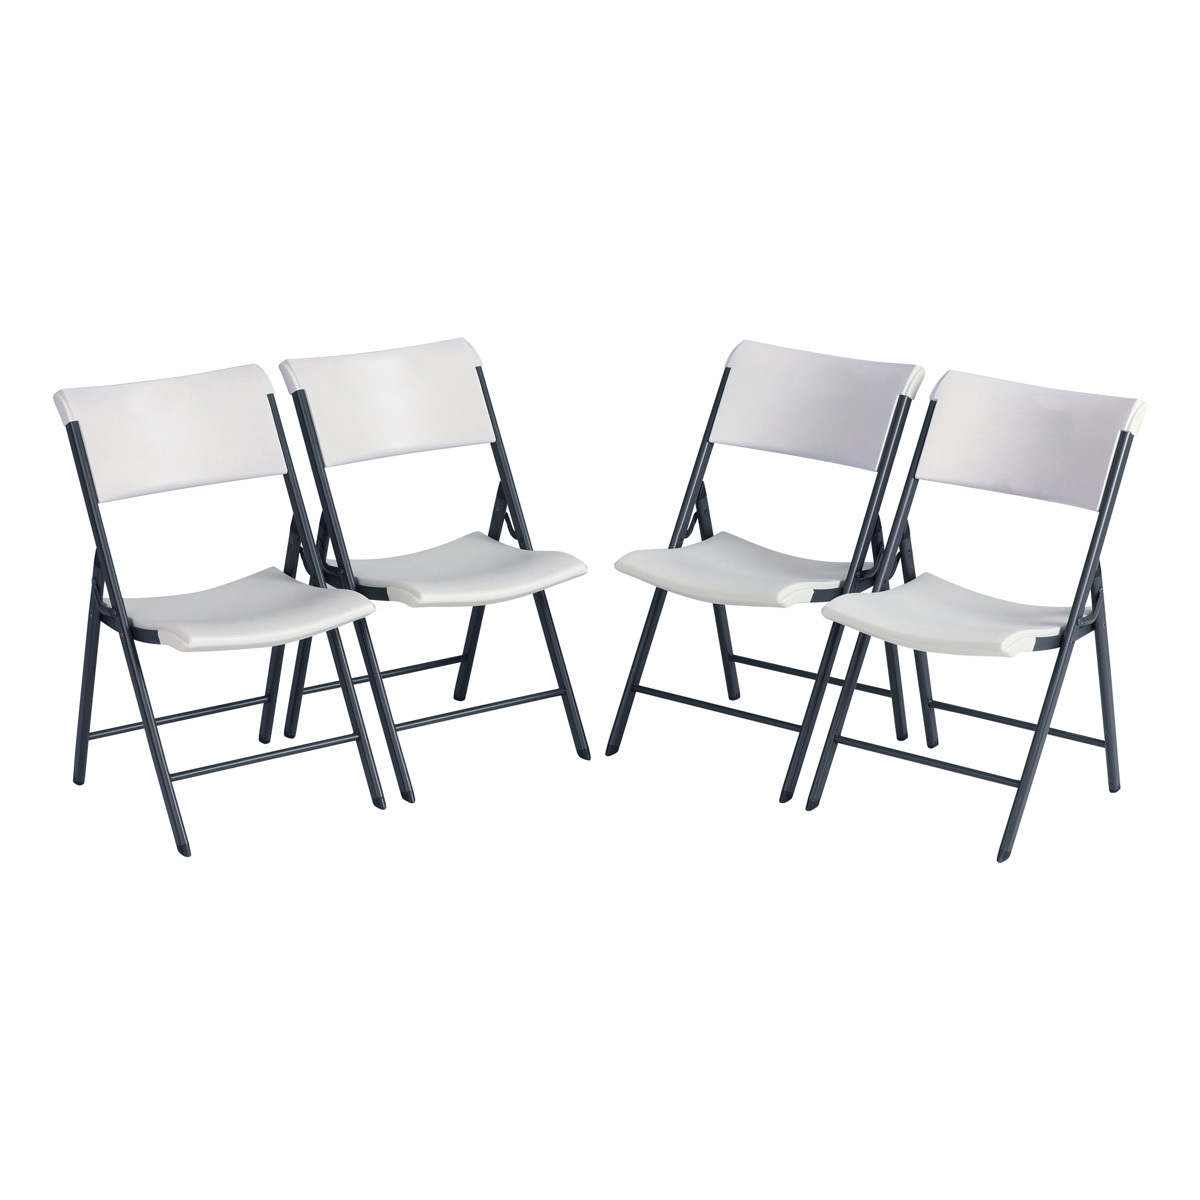 Lifetime Folding Chair Light Commercial - Pack of 4